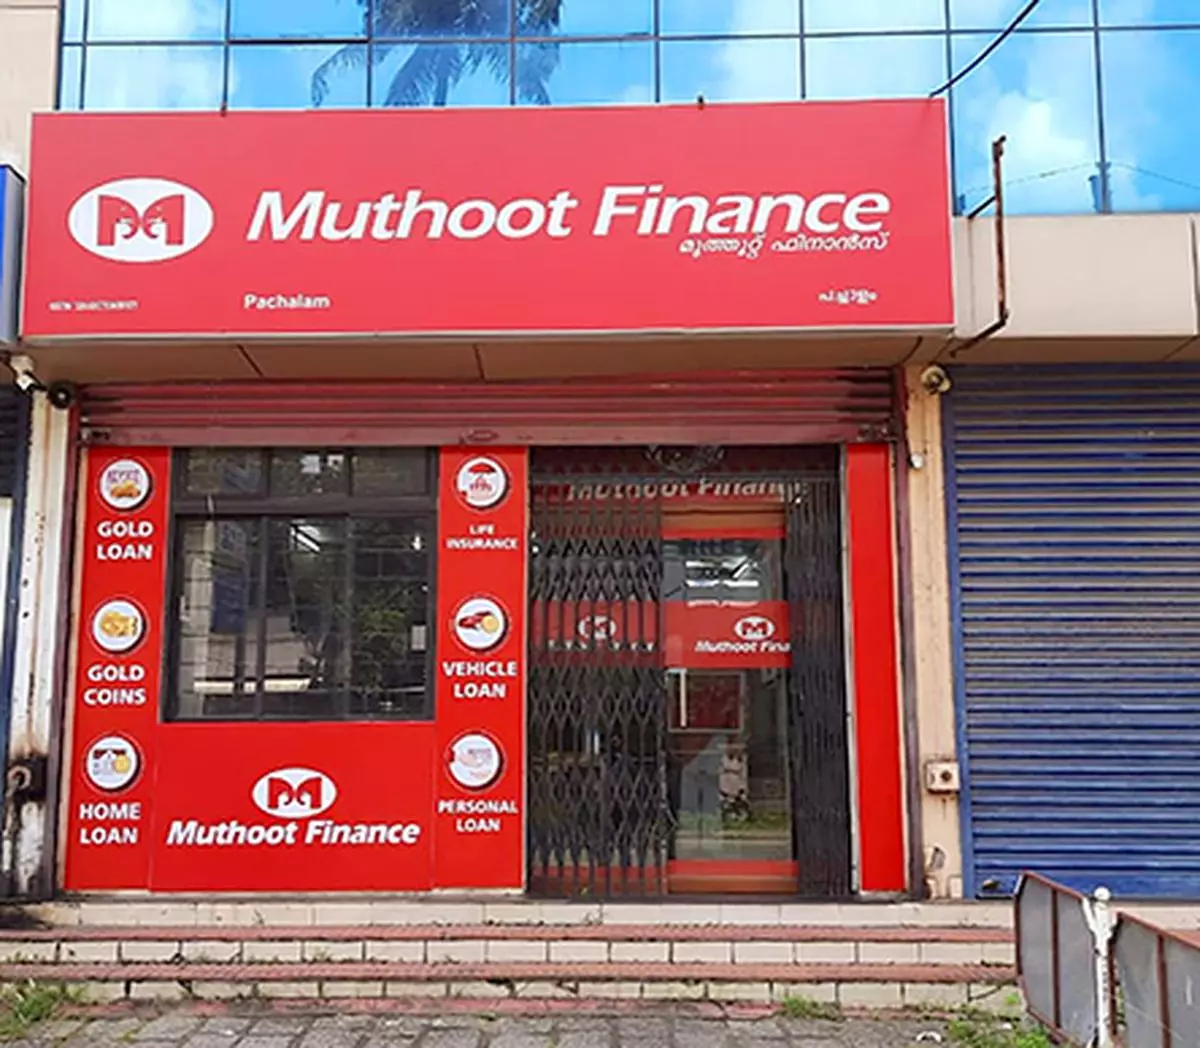 File Photo: A branch of Muthoot Finance